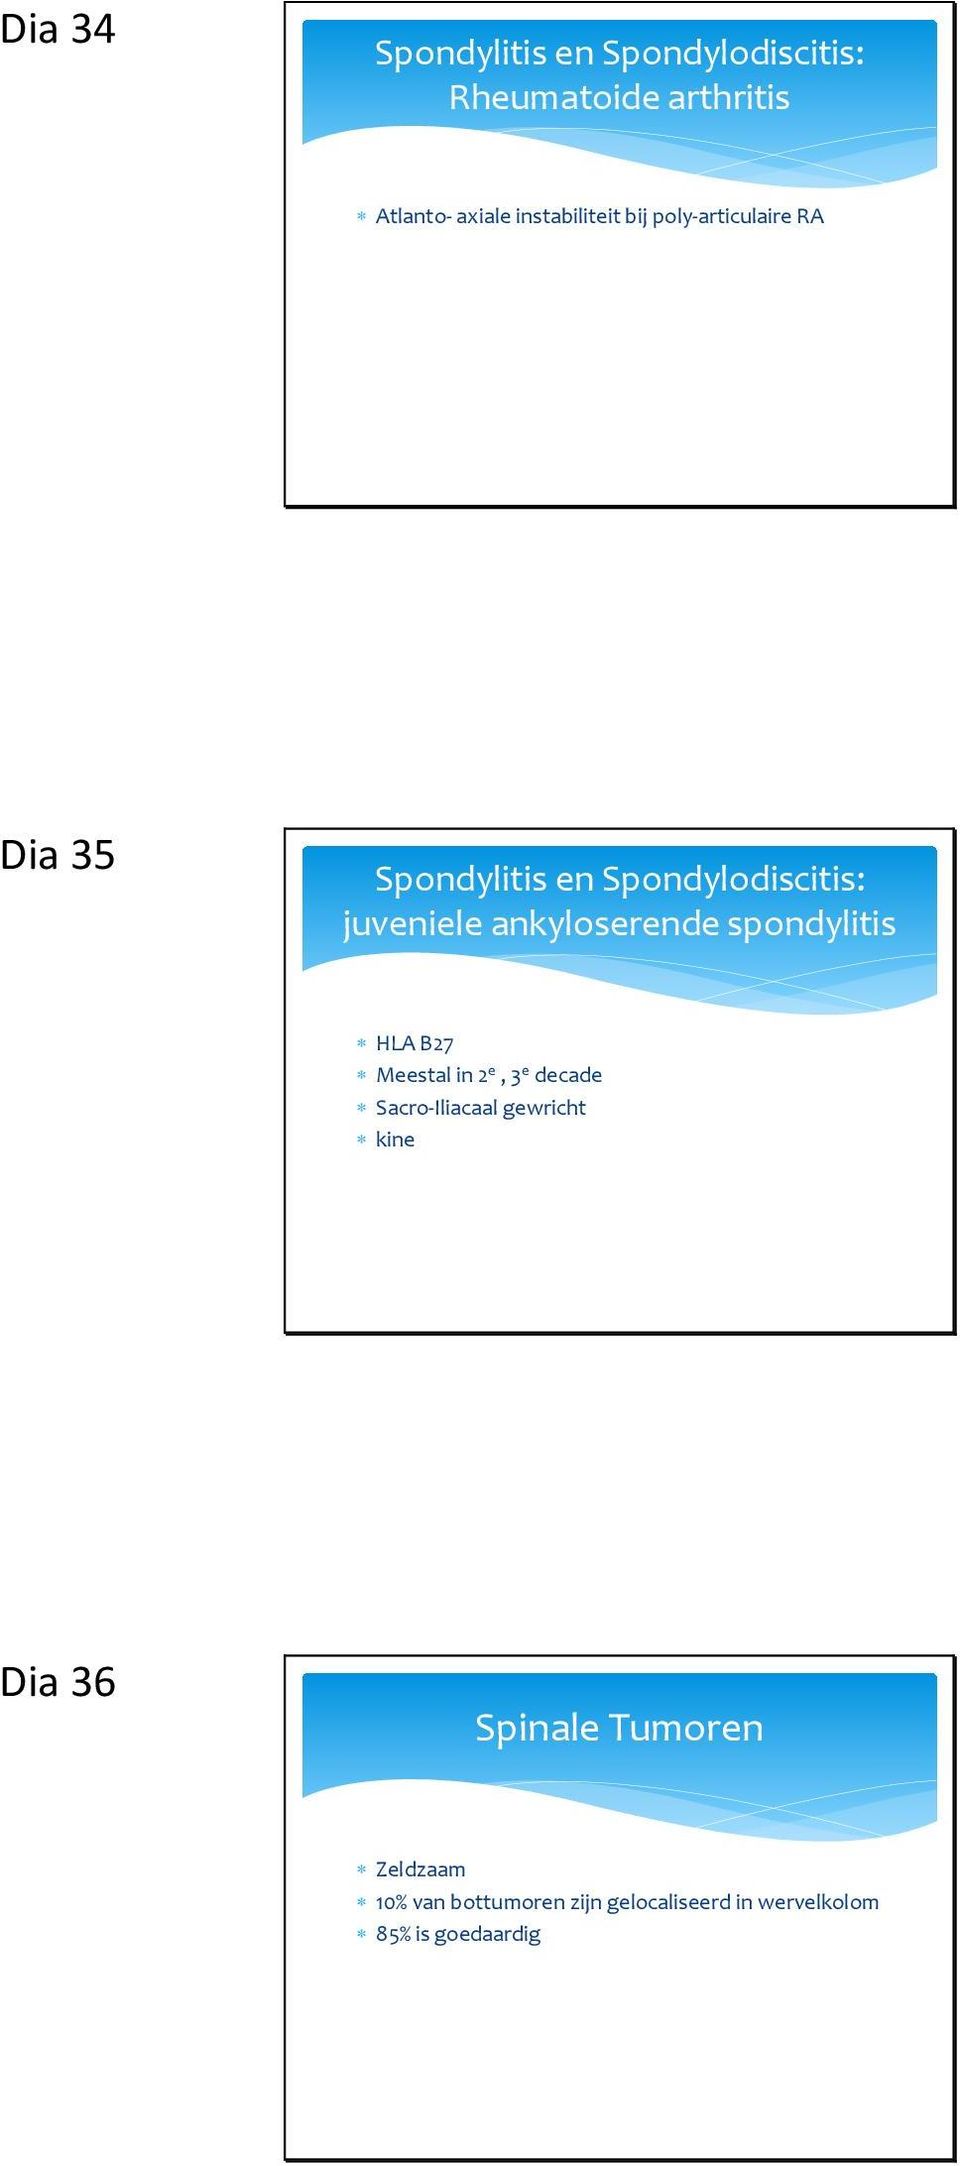 ankyloserende spondylitis HLA B27 Meestal in 2 e, 3 e decade Sacro-Iliacaal gewricht kine